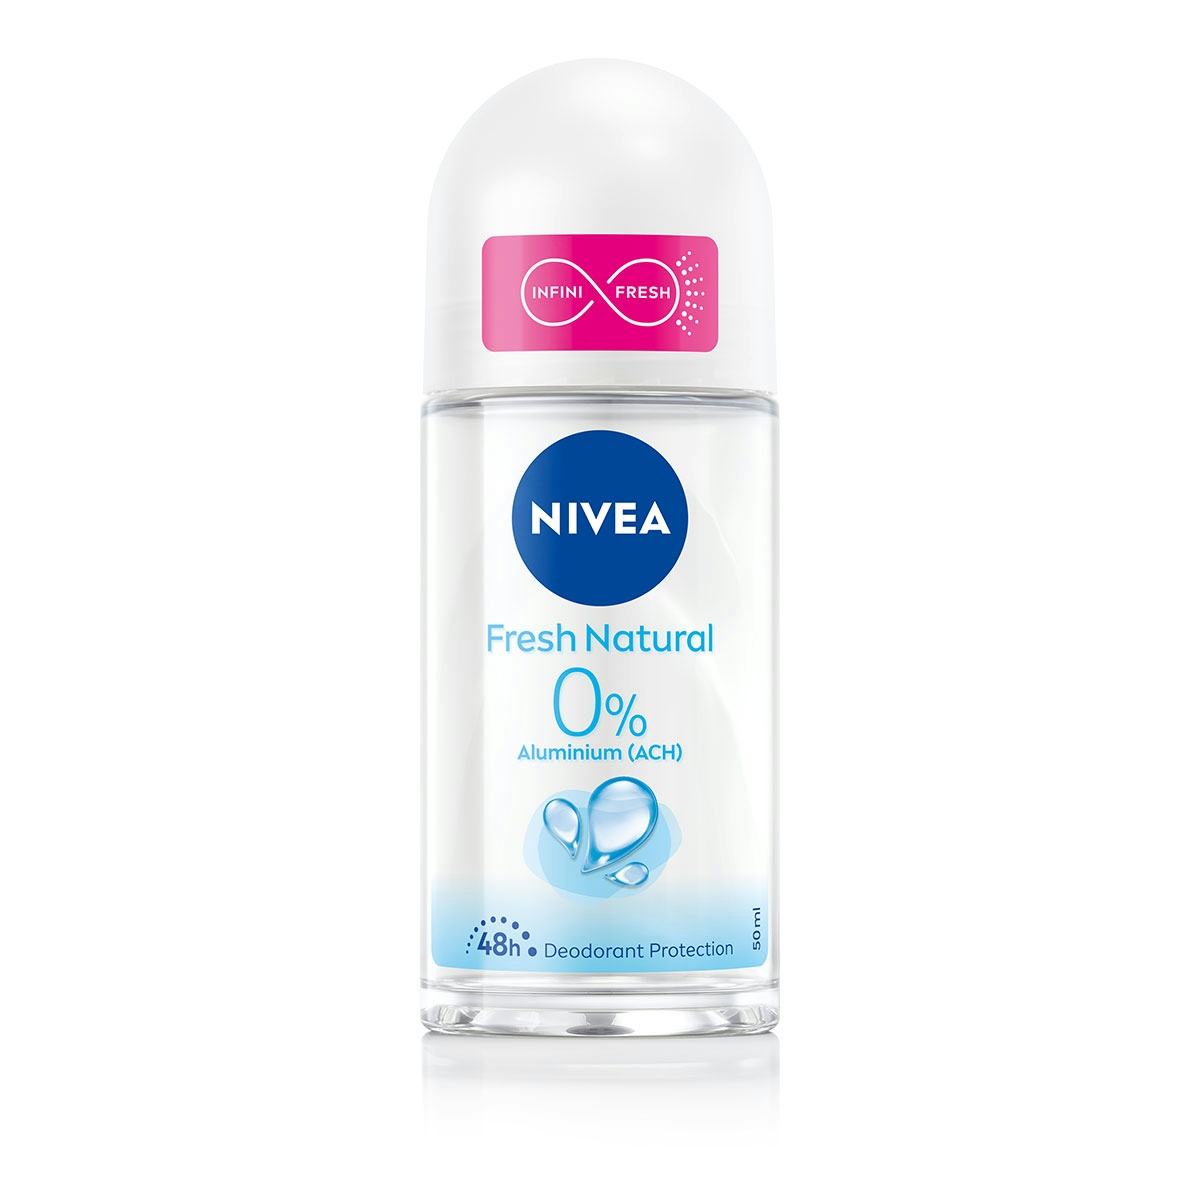 Desodorante roll on 0% fresh natur NIVEA 50 ml